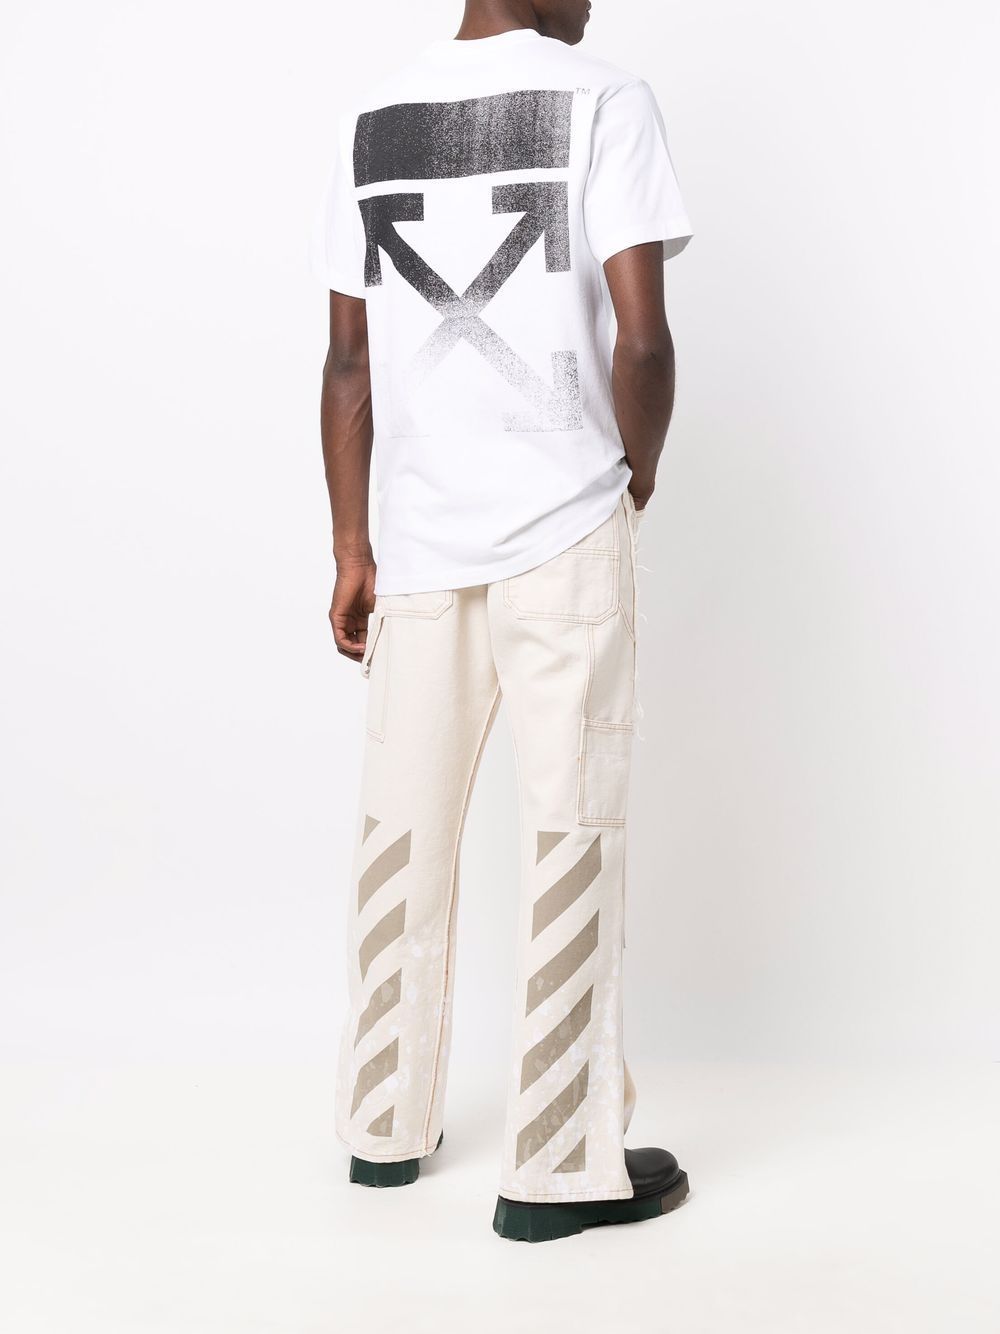 OFF-WHITE Faded Arrow Print T-Shirt White - MAISONDEFASHION.COM